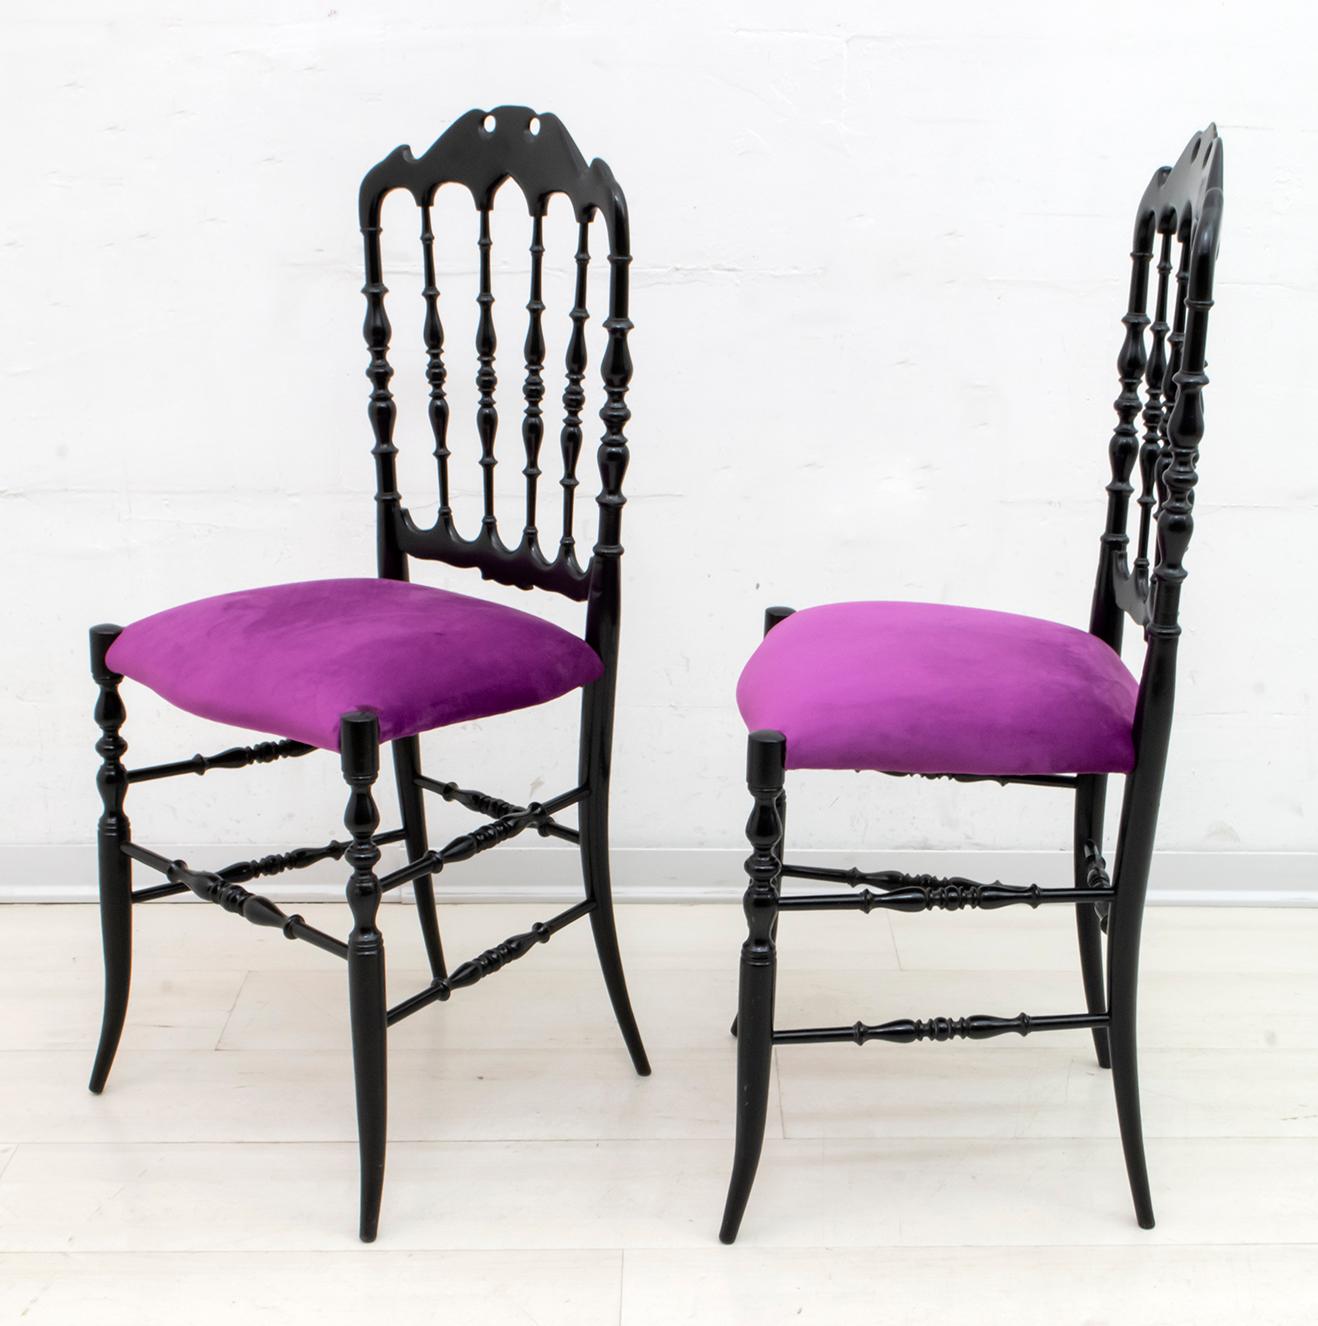 Pair of Giuseppe Gaetano Descalzi Midcentury Italian Chiavari Chairs, 1950s For Sale 2